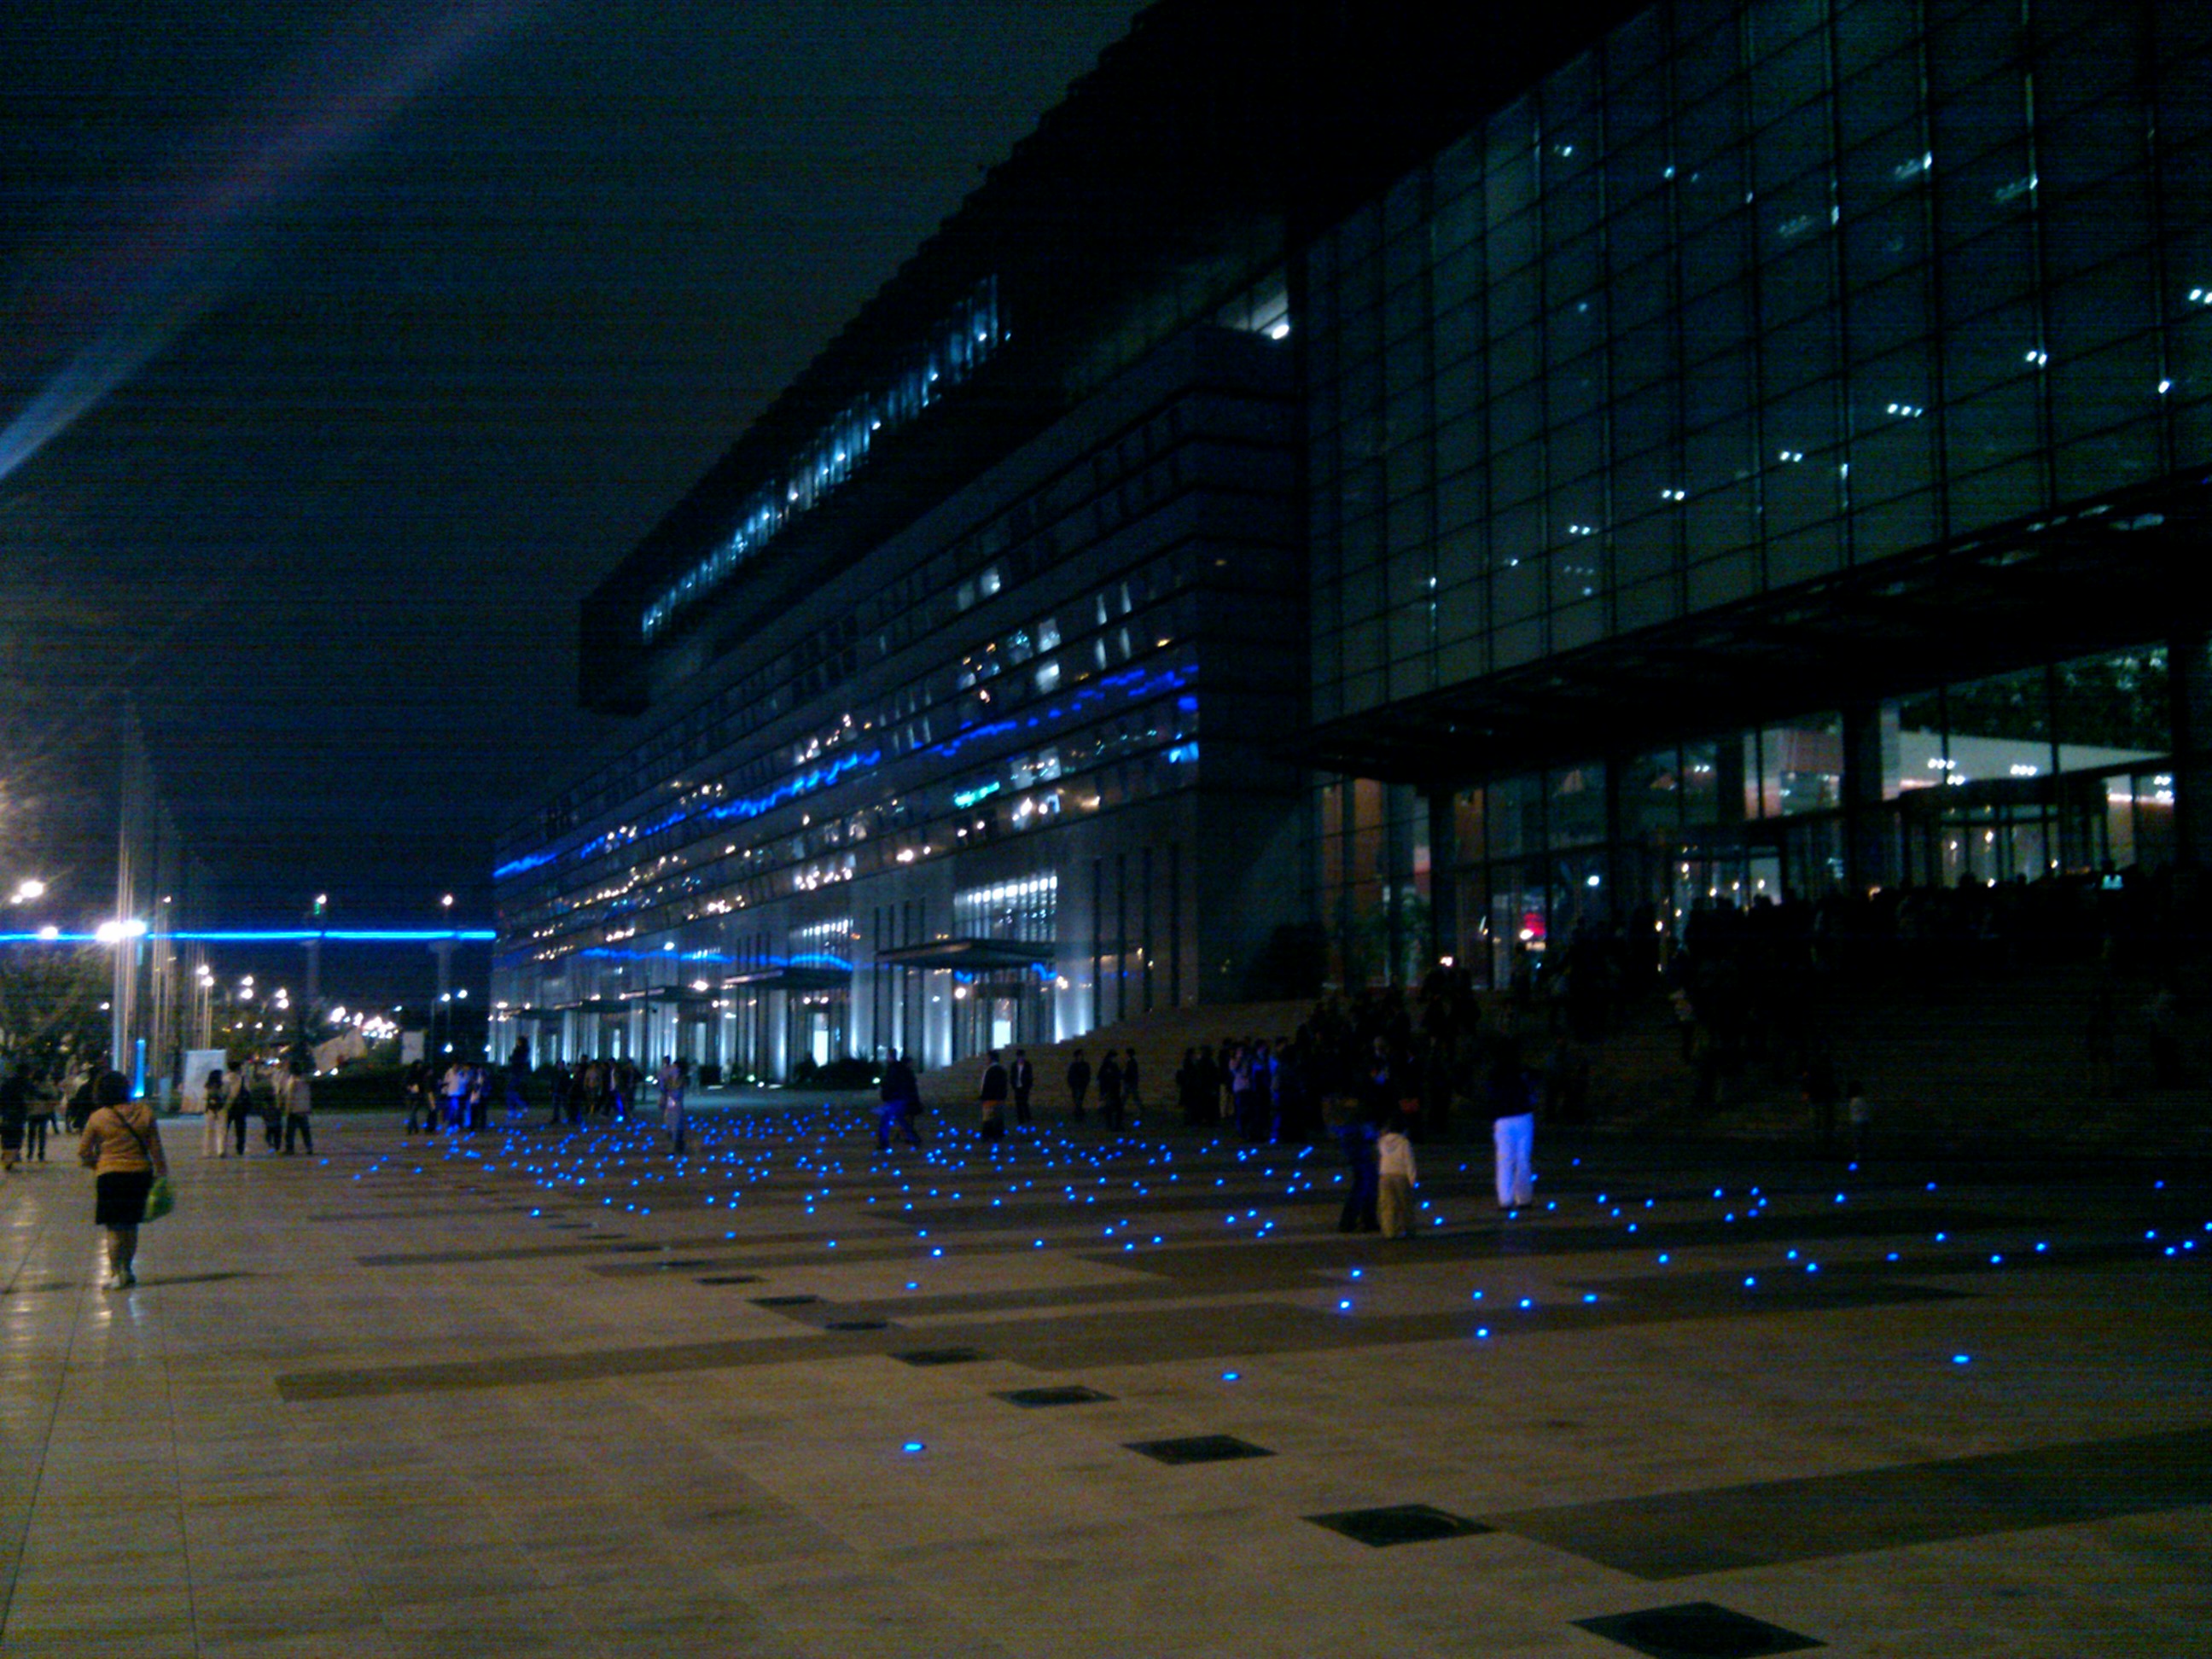 File:Night scene at Shanghai Expo 2010.jpg - Wikimedia Commons